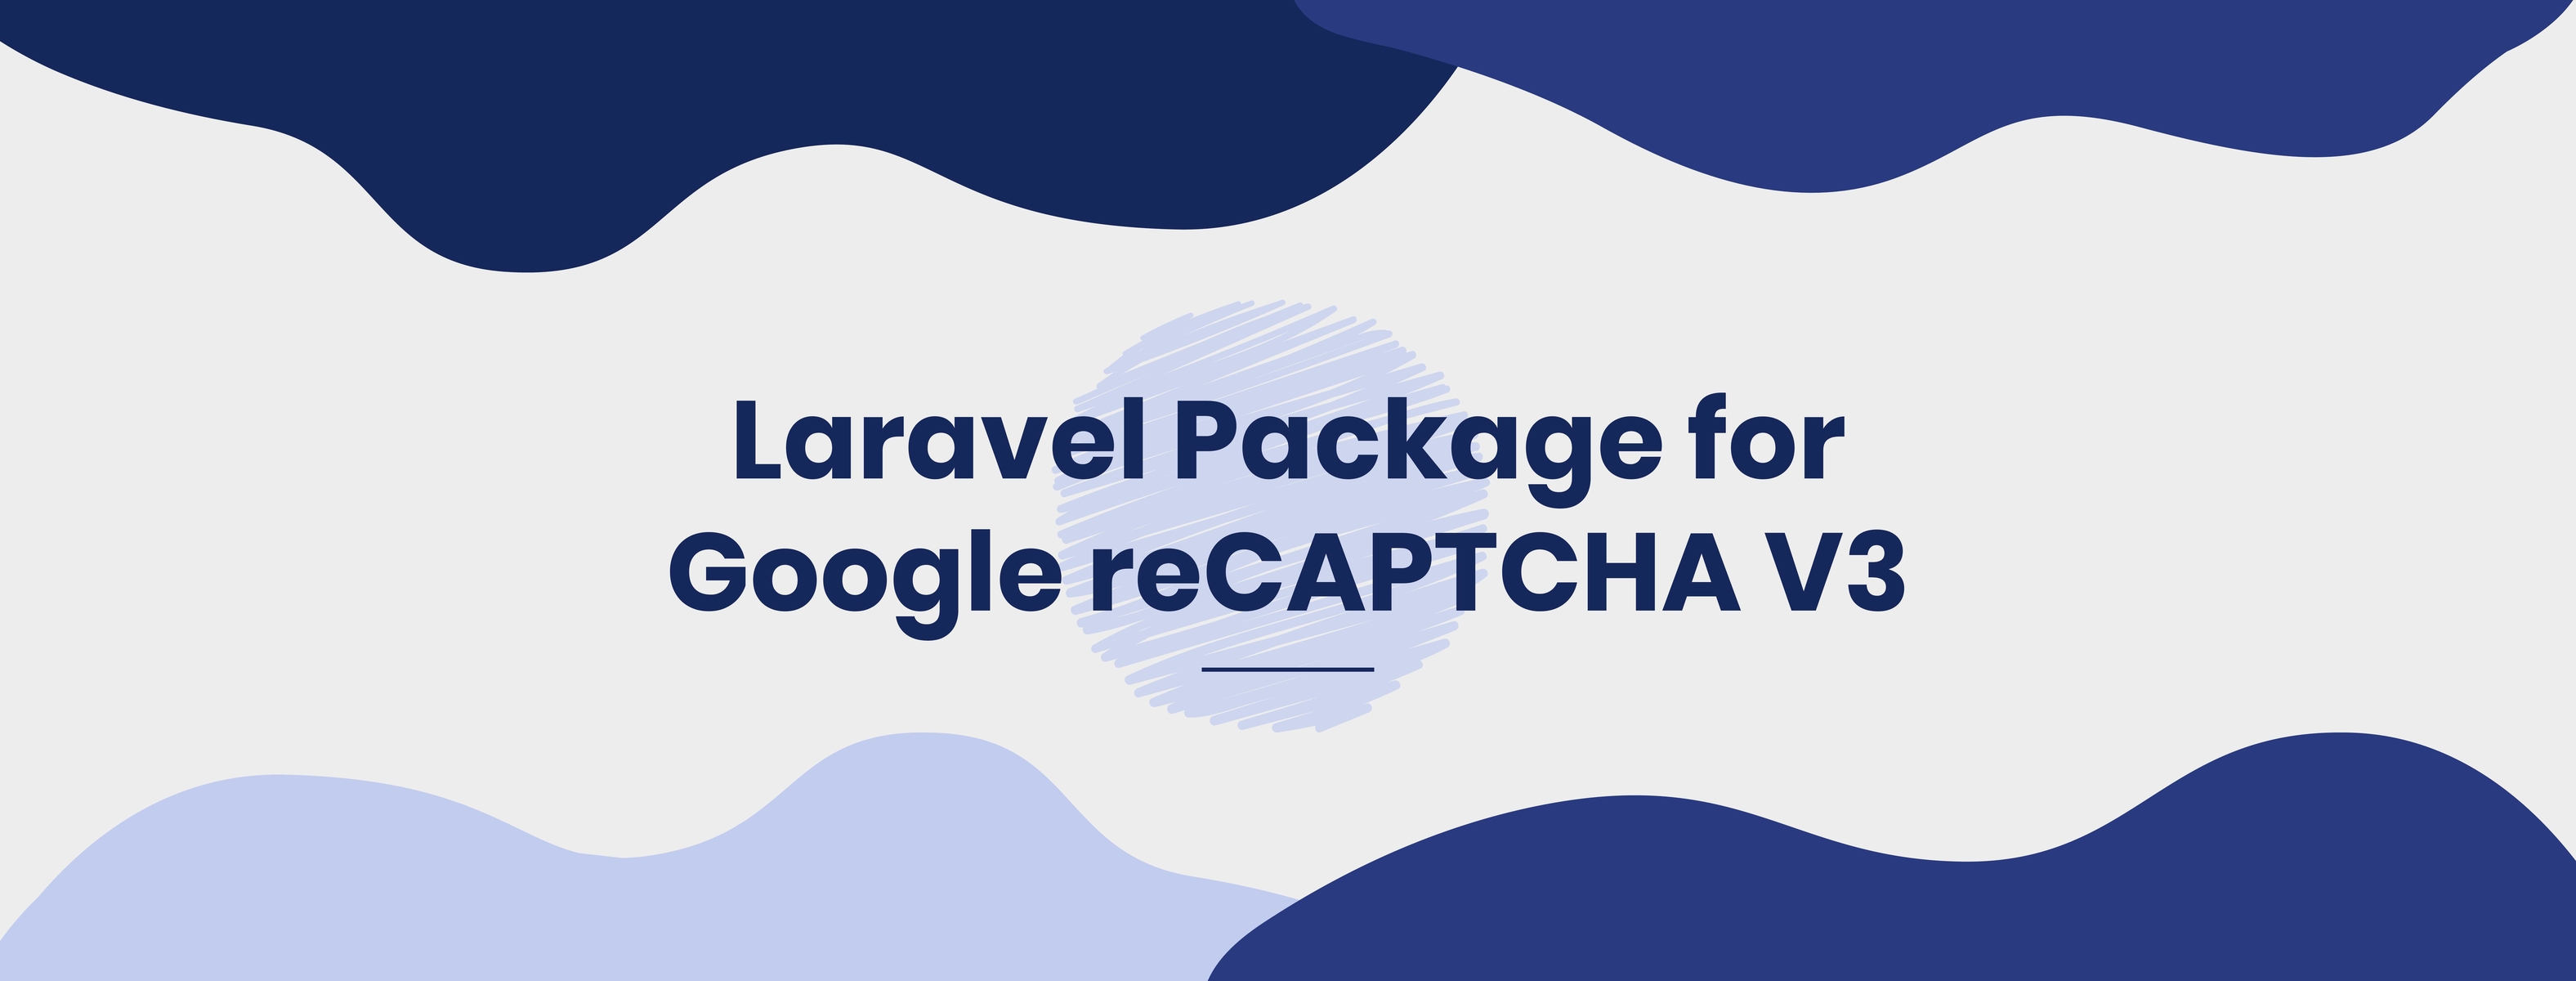 A New Laravel Package for Google reCAPTCHA V3 cover image